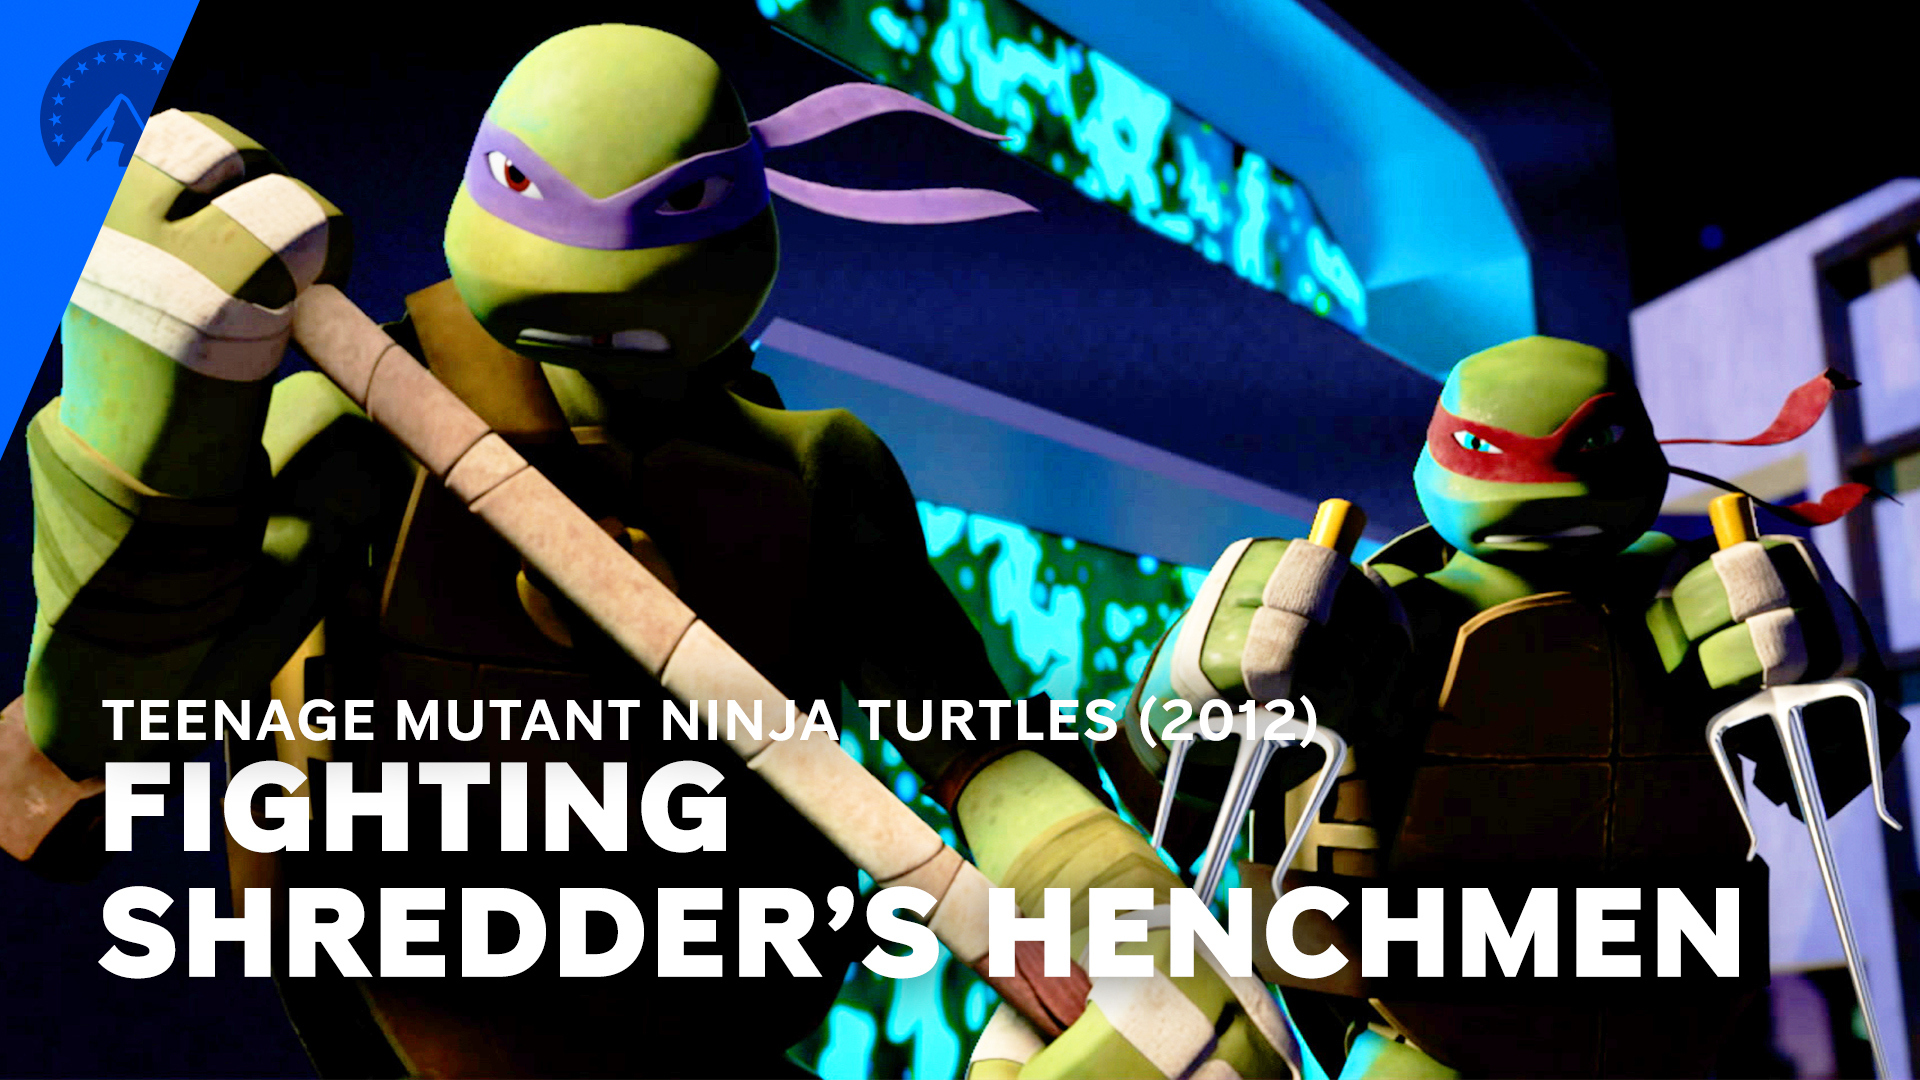 Watch Teenage Mutant Ninja Turtles (2012): Teenage Mutant Ninja Turtles ( 2012), Fighting Shredder's Henchmen (S1, E9)